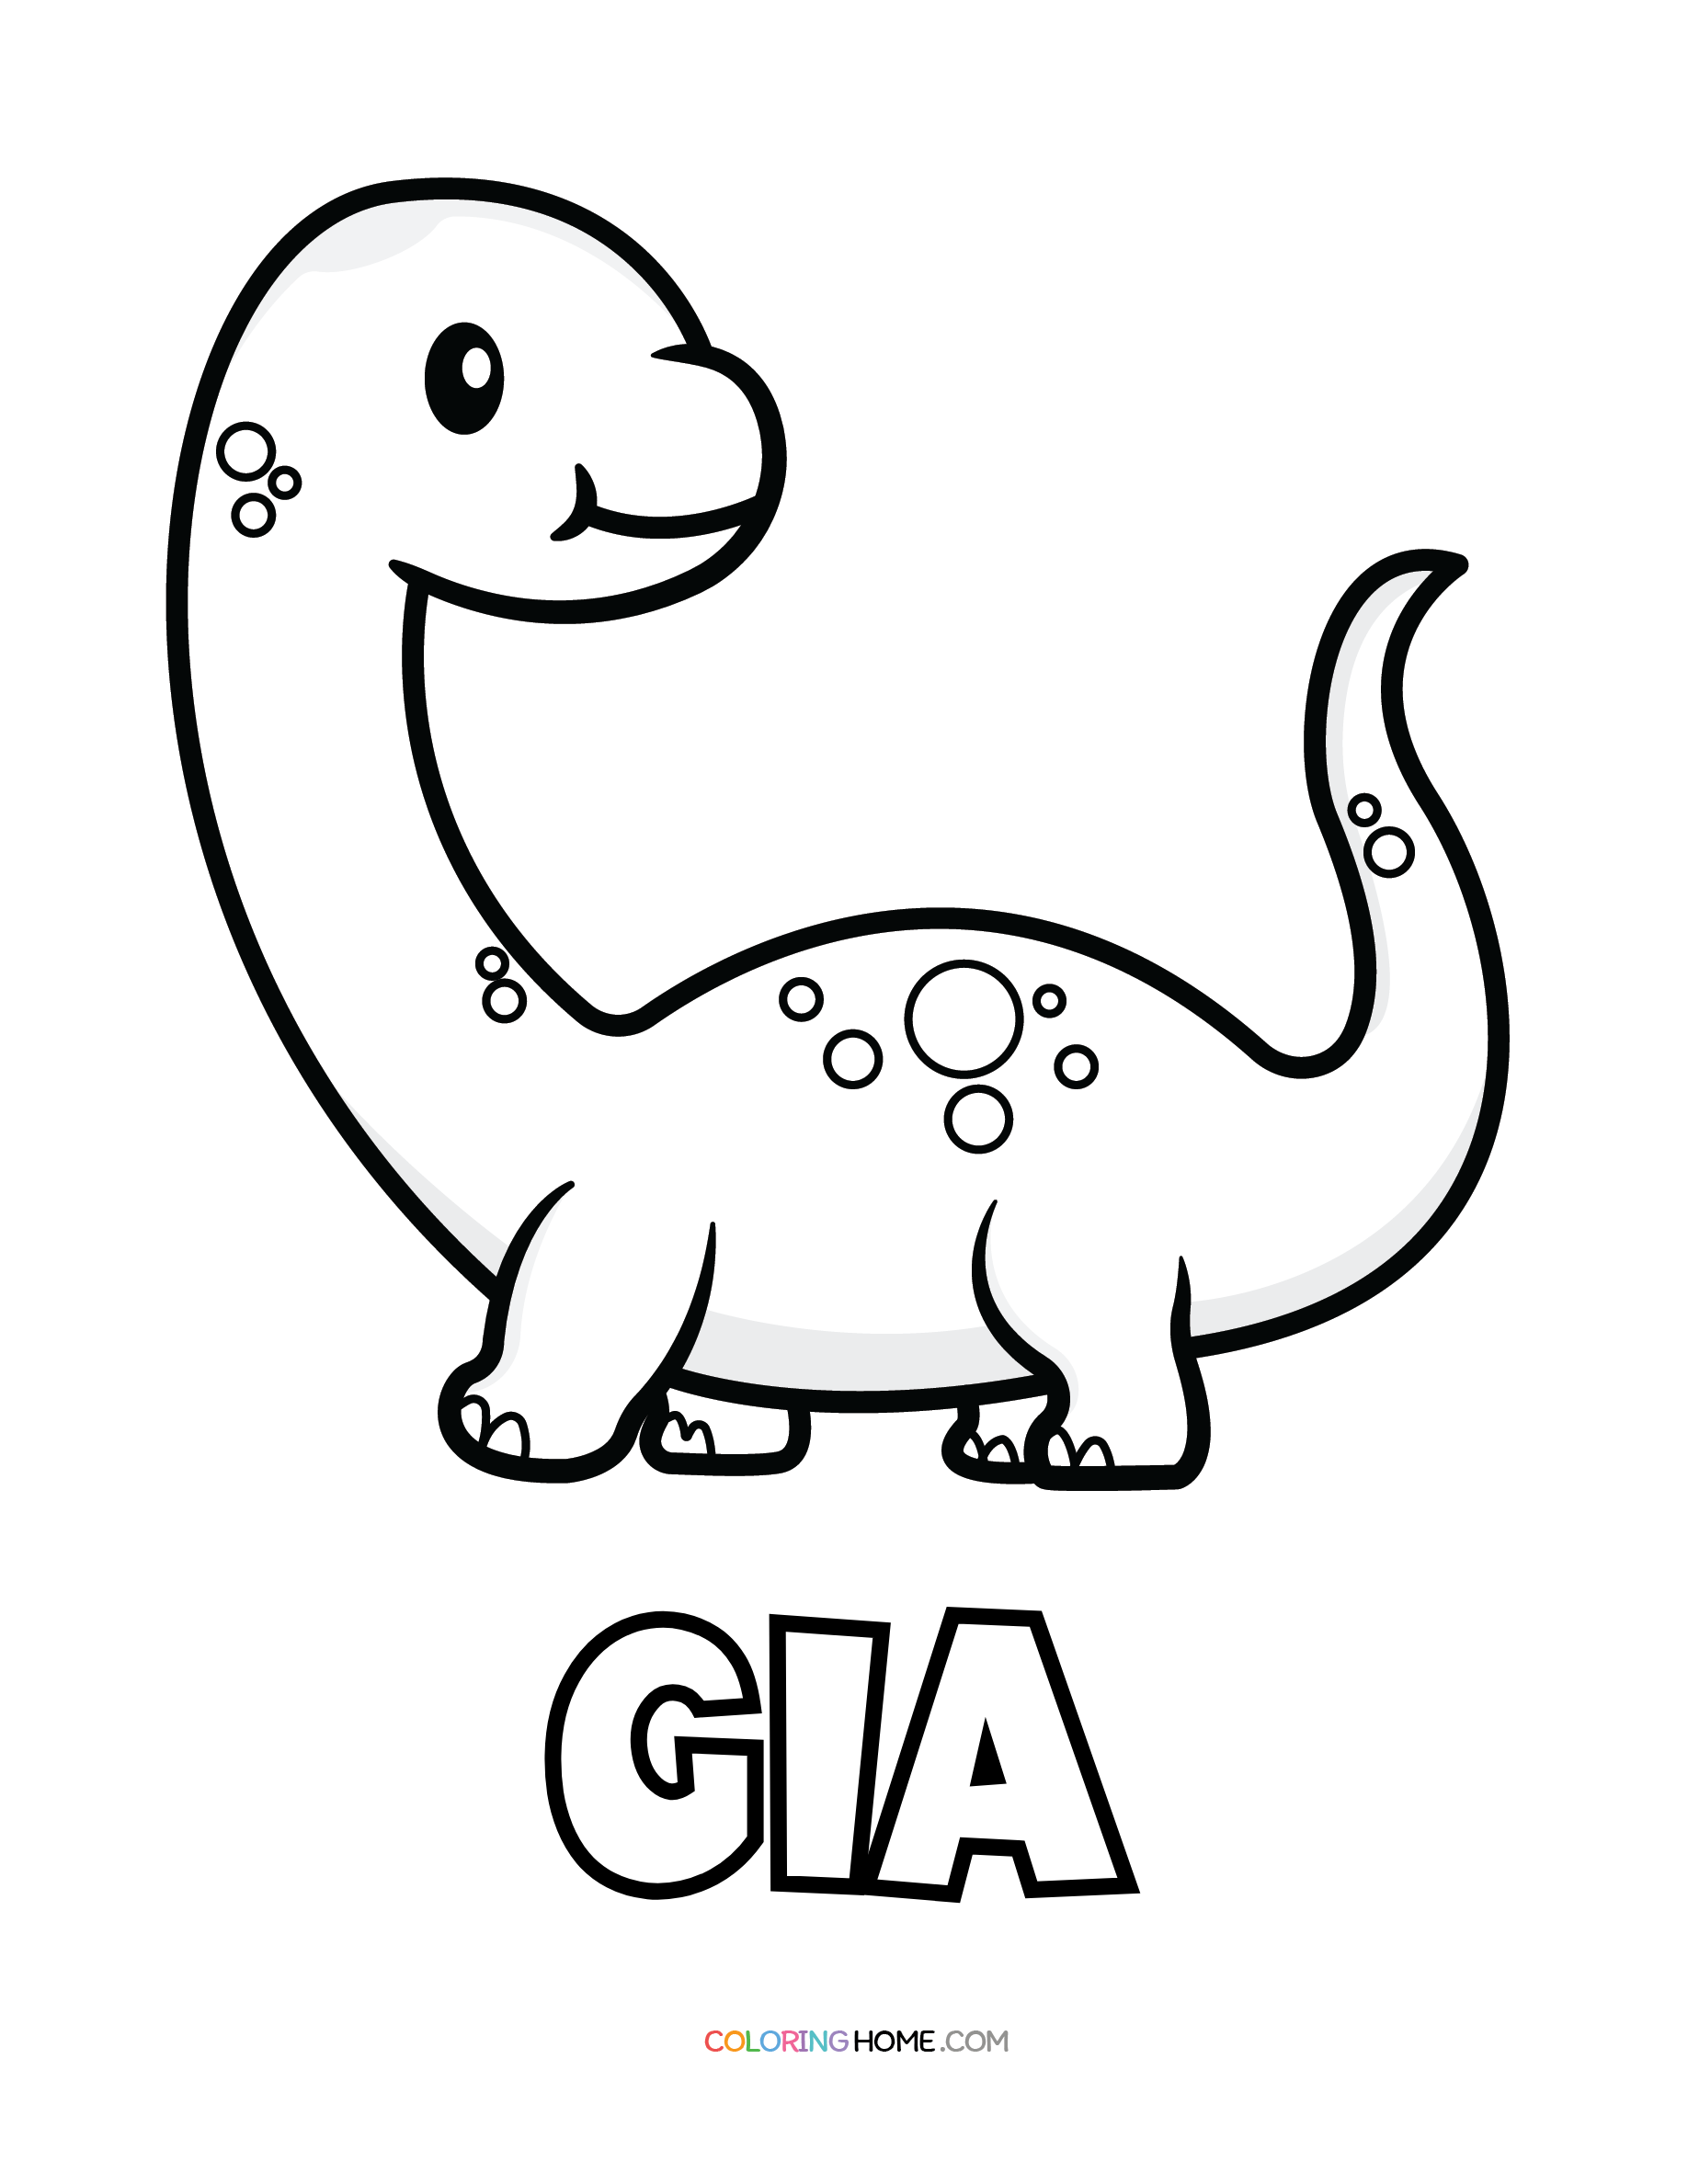 Gia dinosaur coloring page